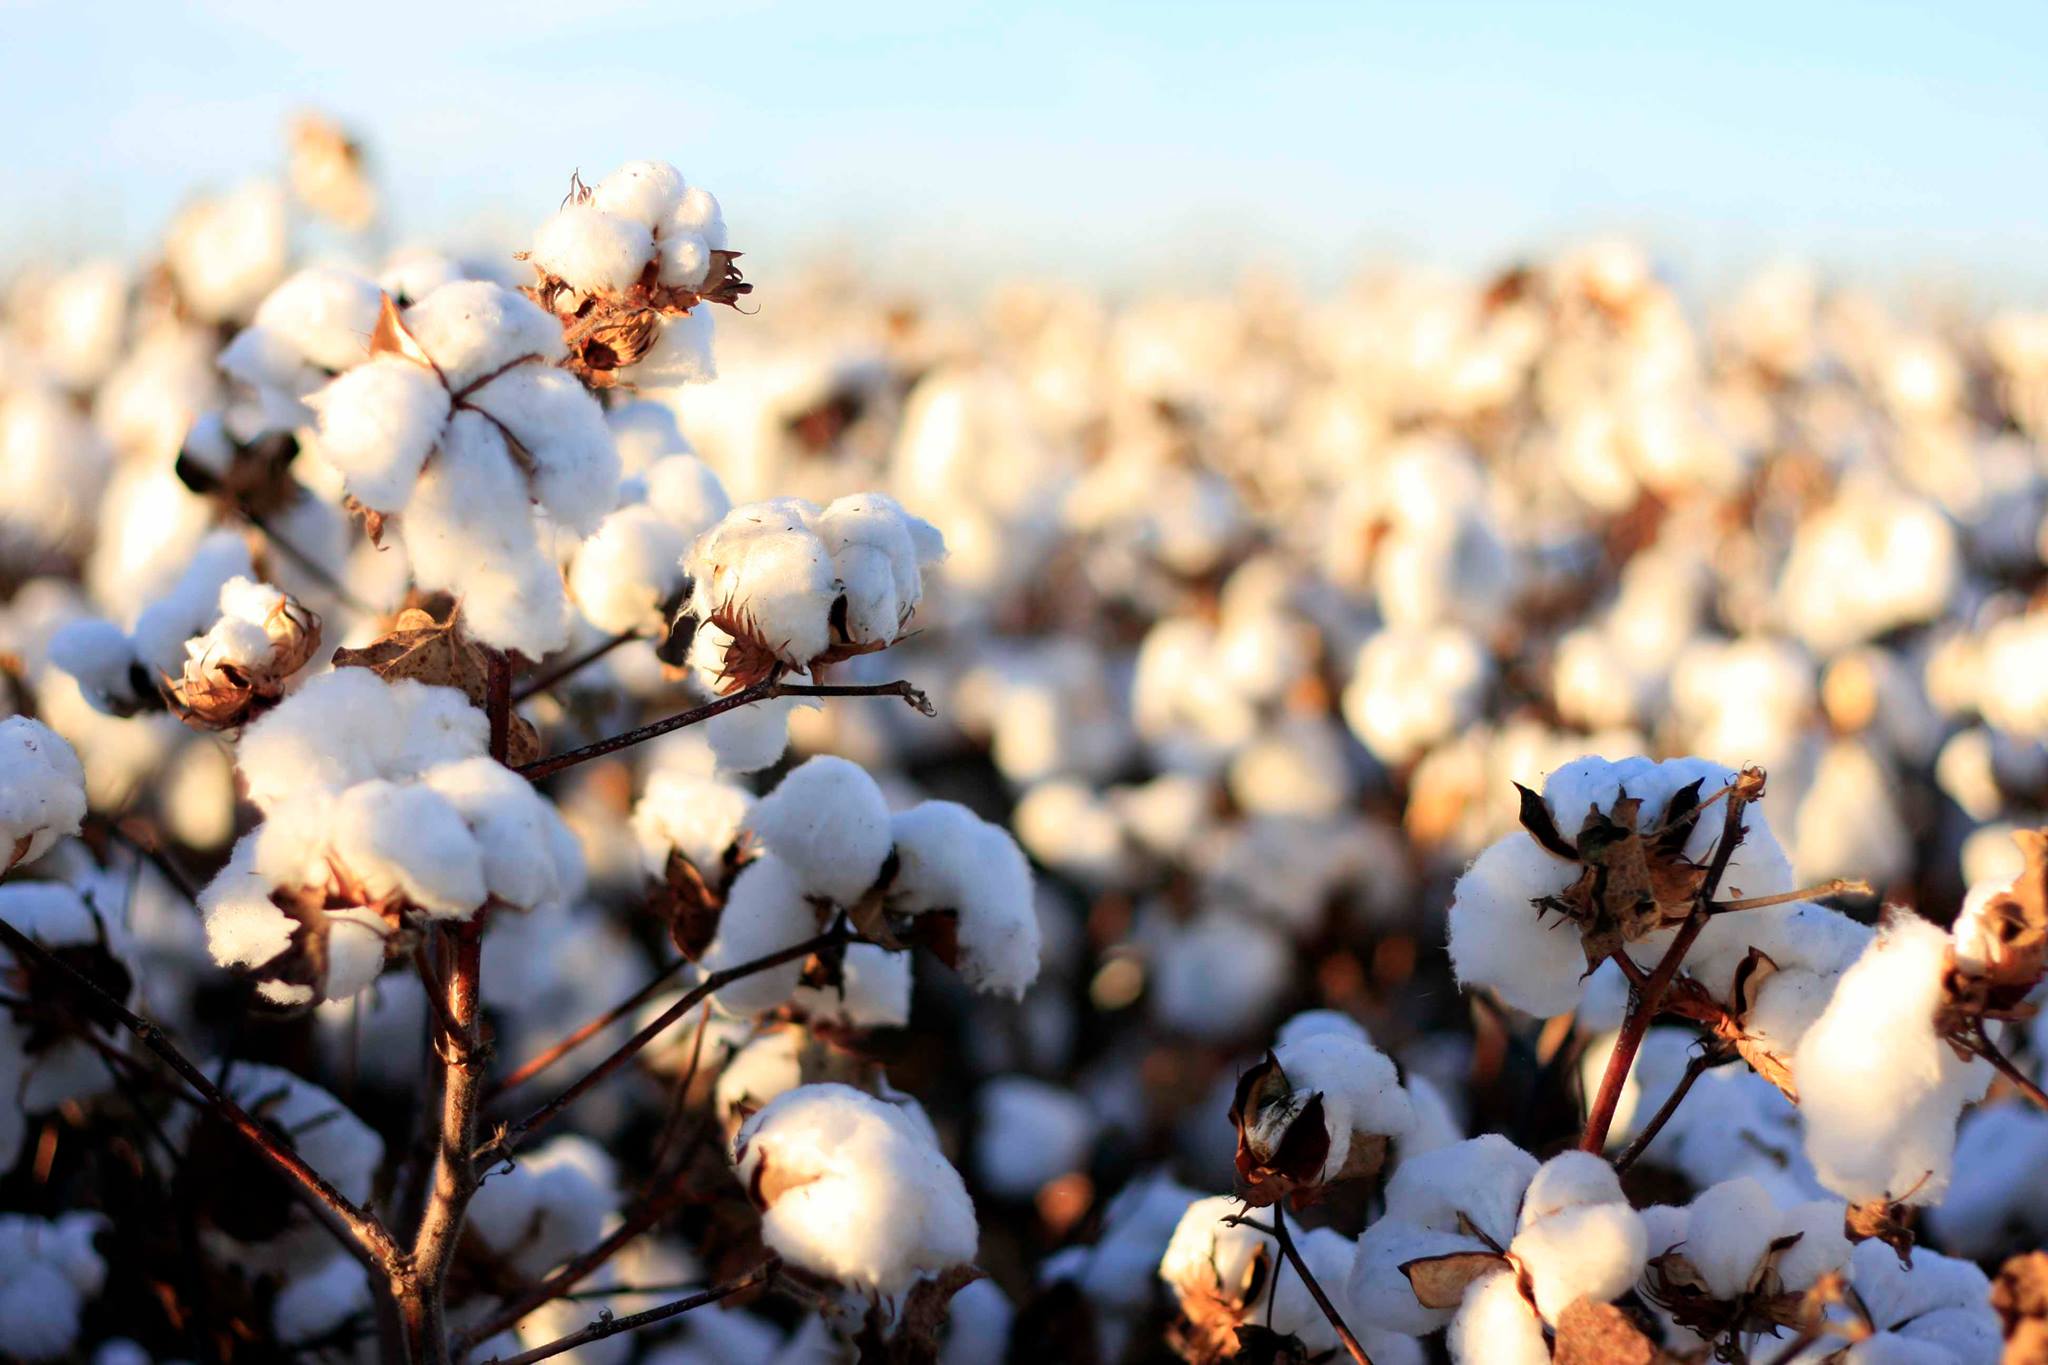 Field of full cotton bolls